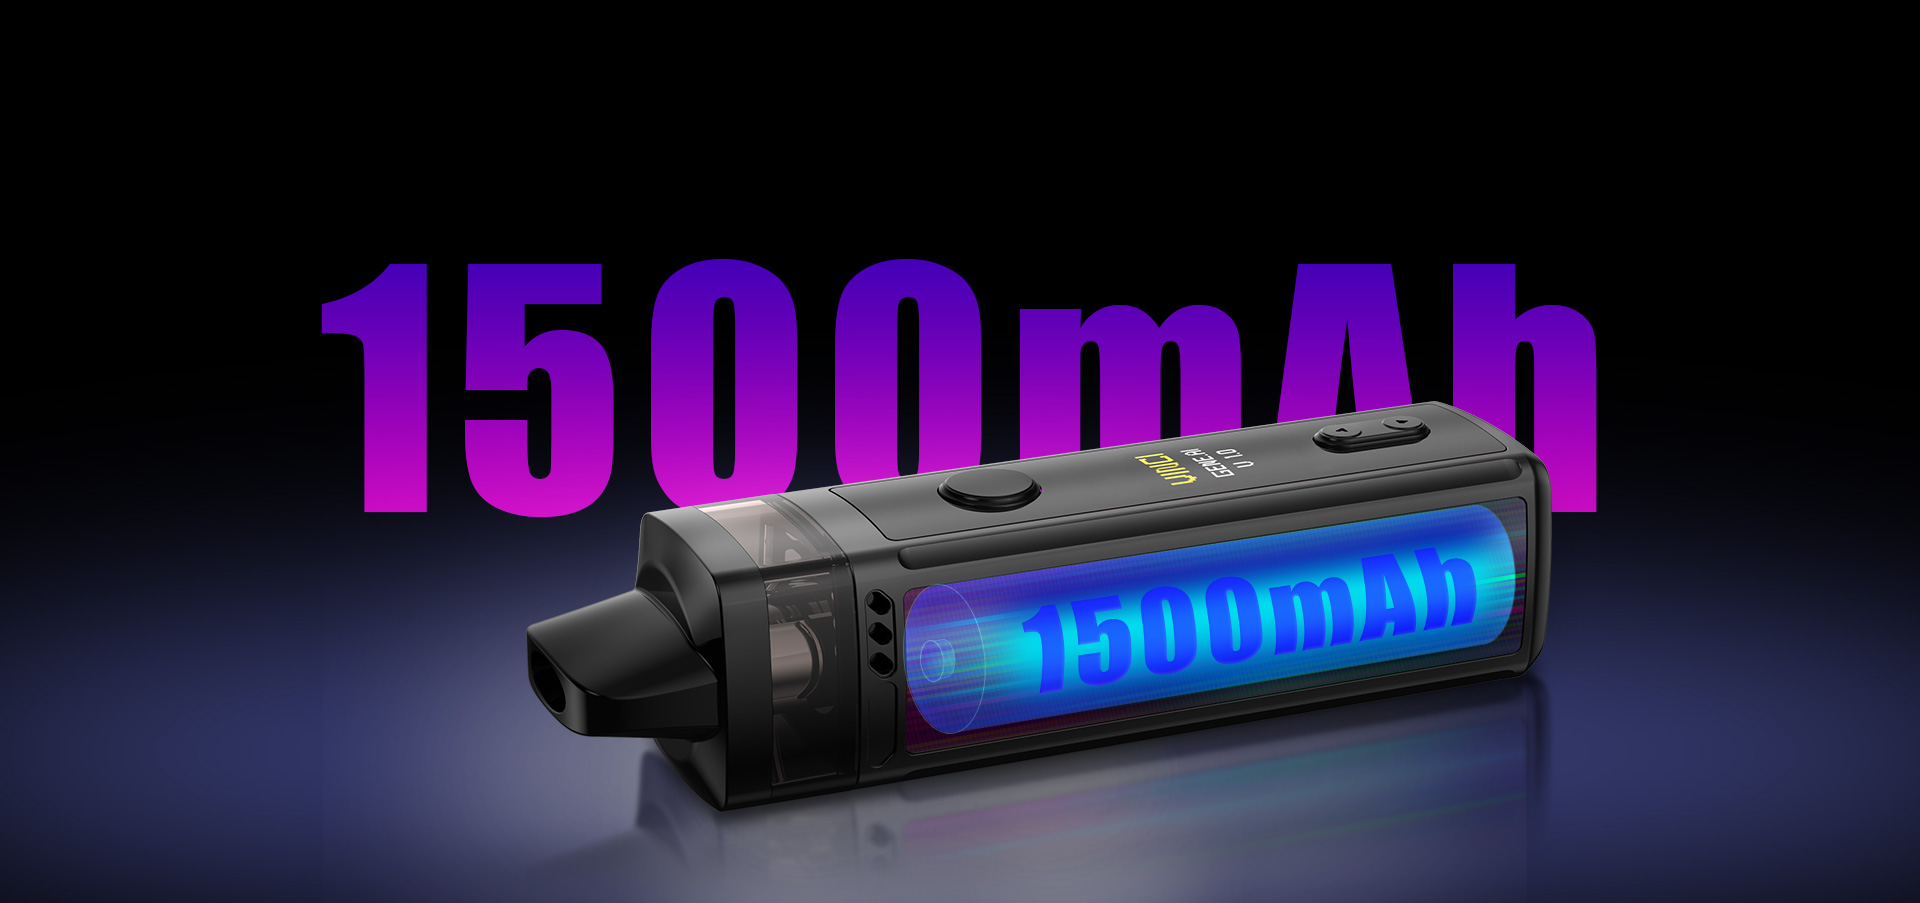 Vinci Mod Pod Kit Built in 1500mAh battery